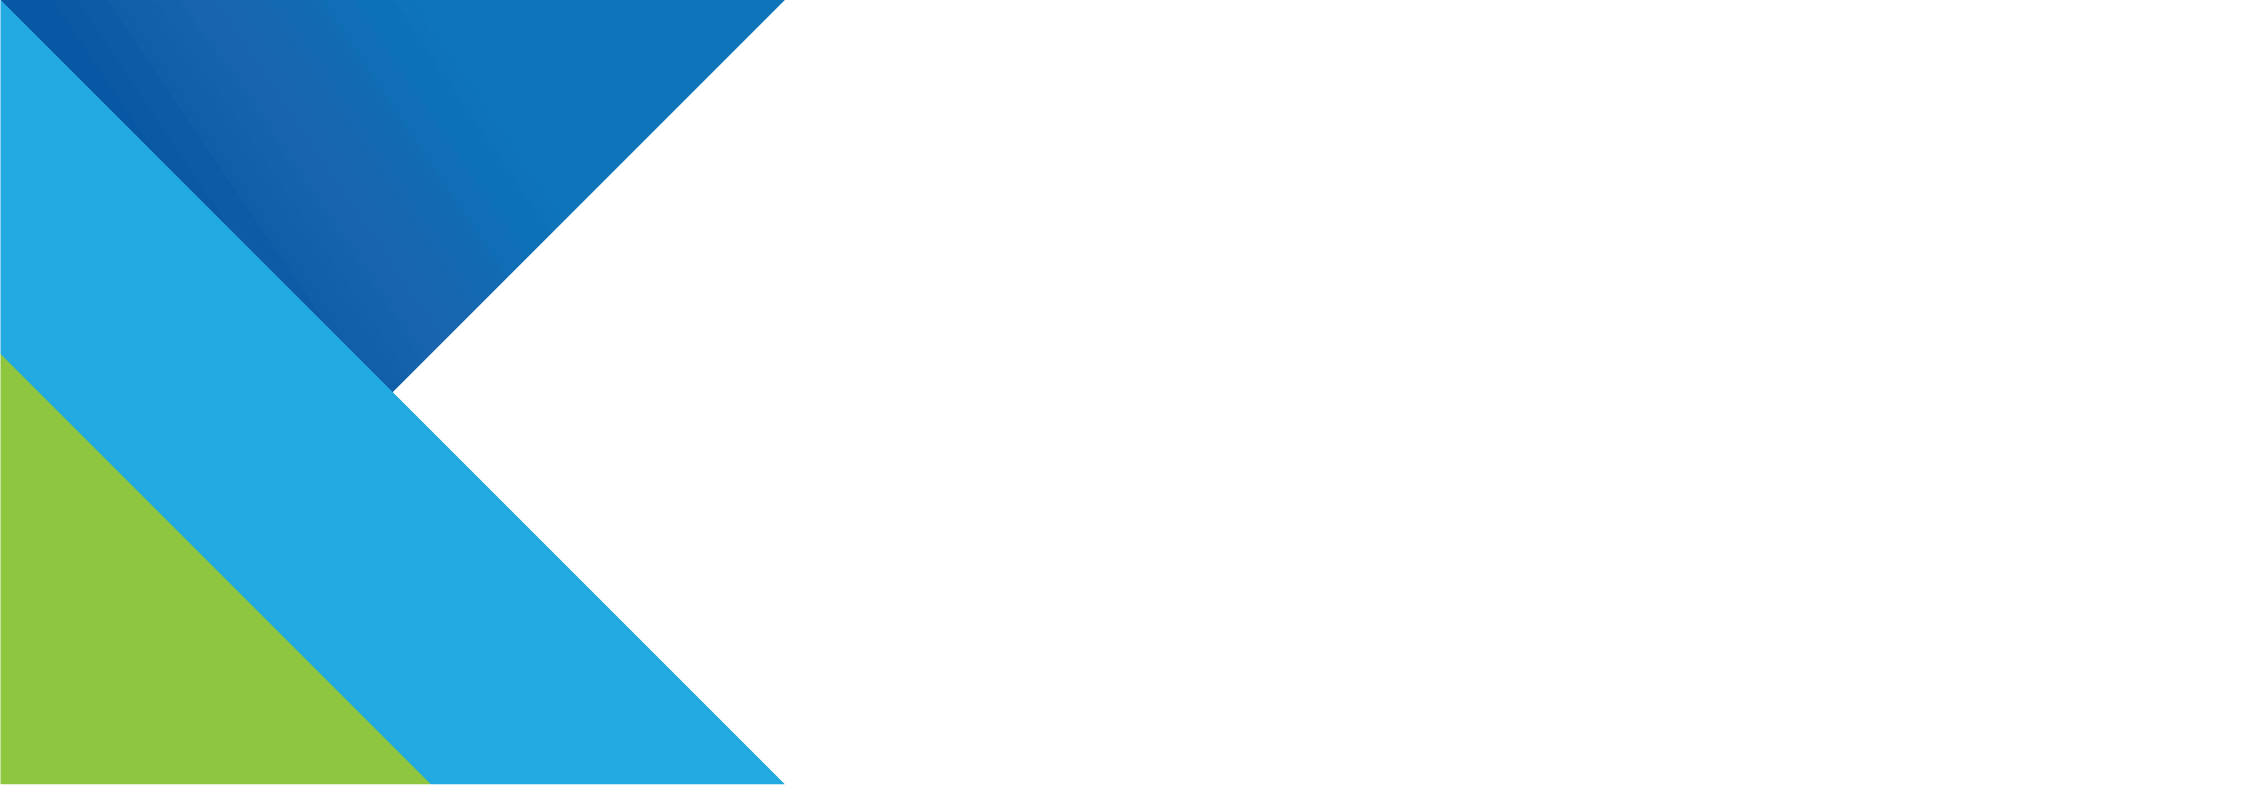 Kalamazoo Downtown Partnership